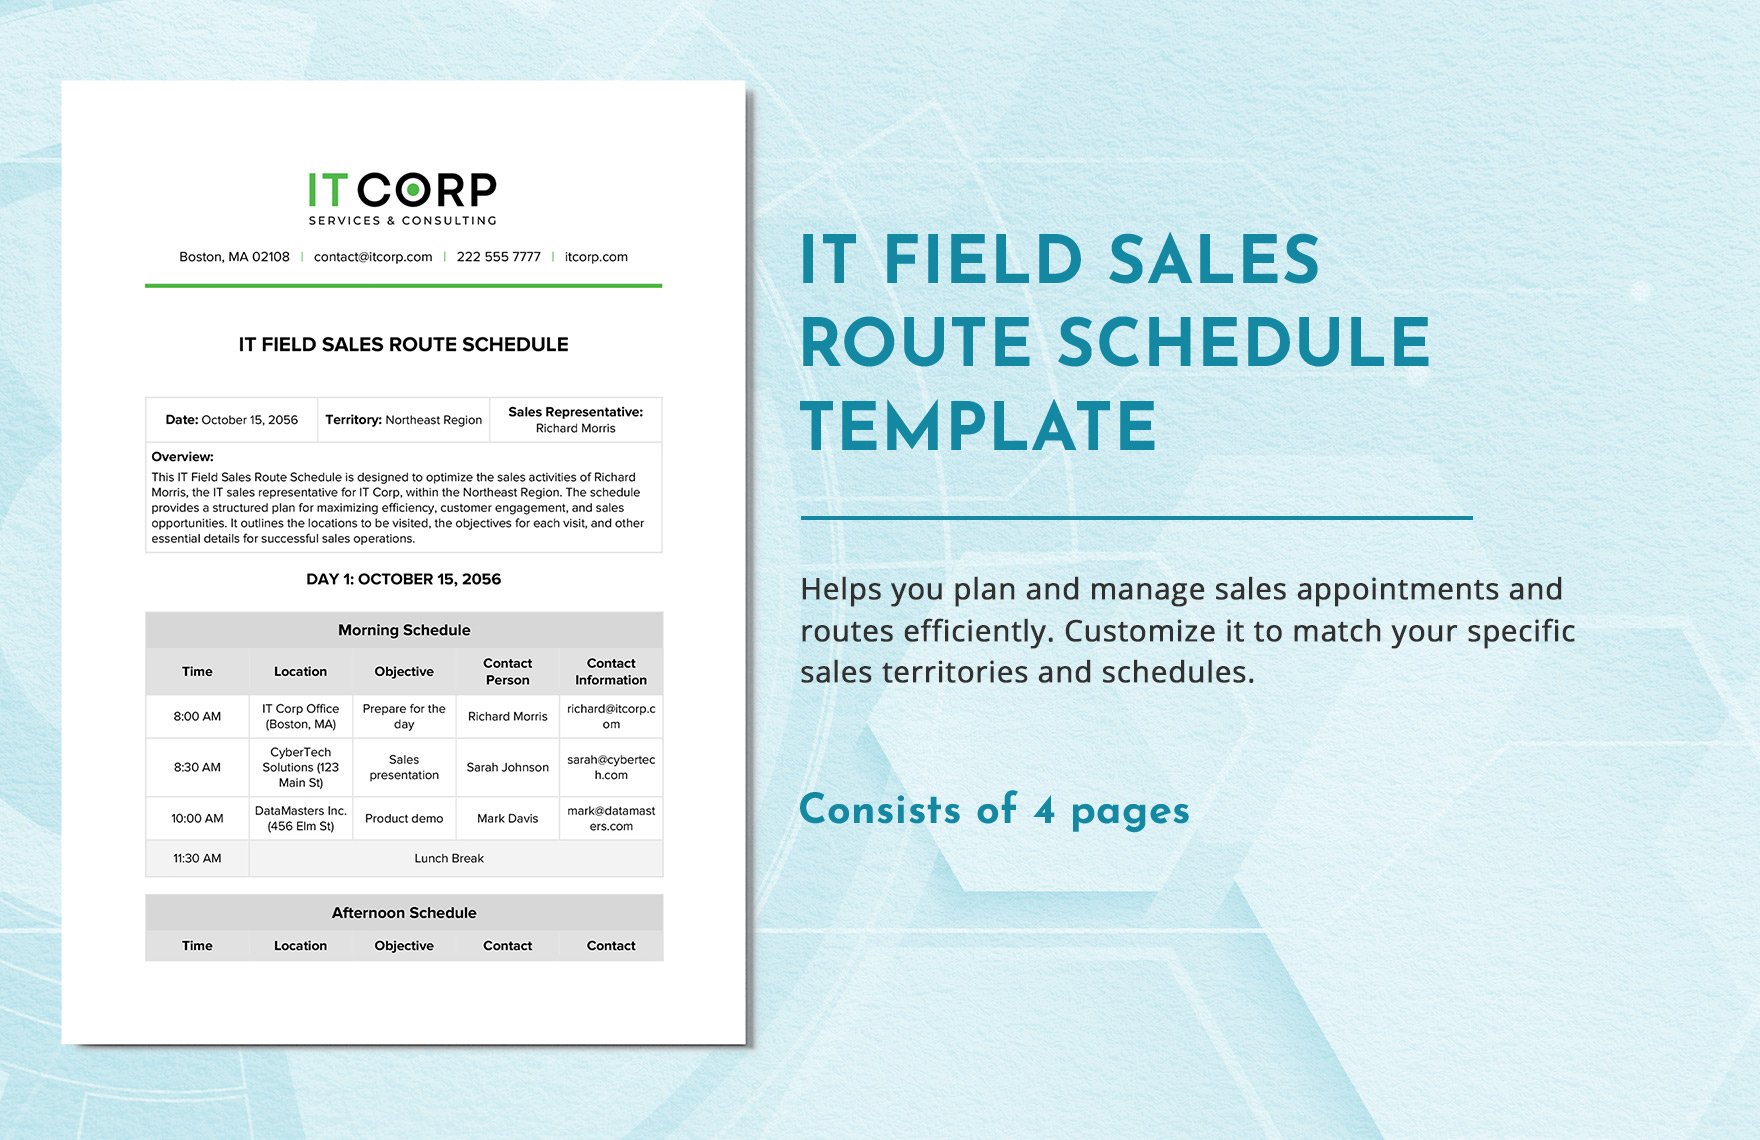 IT Field Sales Route Schedule Template in Word, Google Docs, PDF